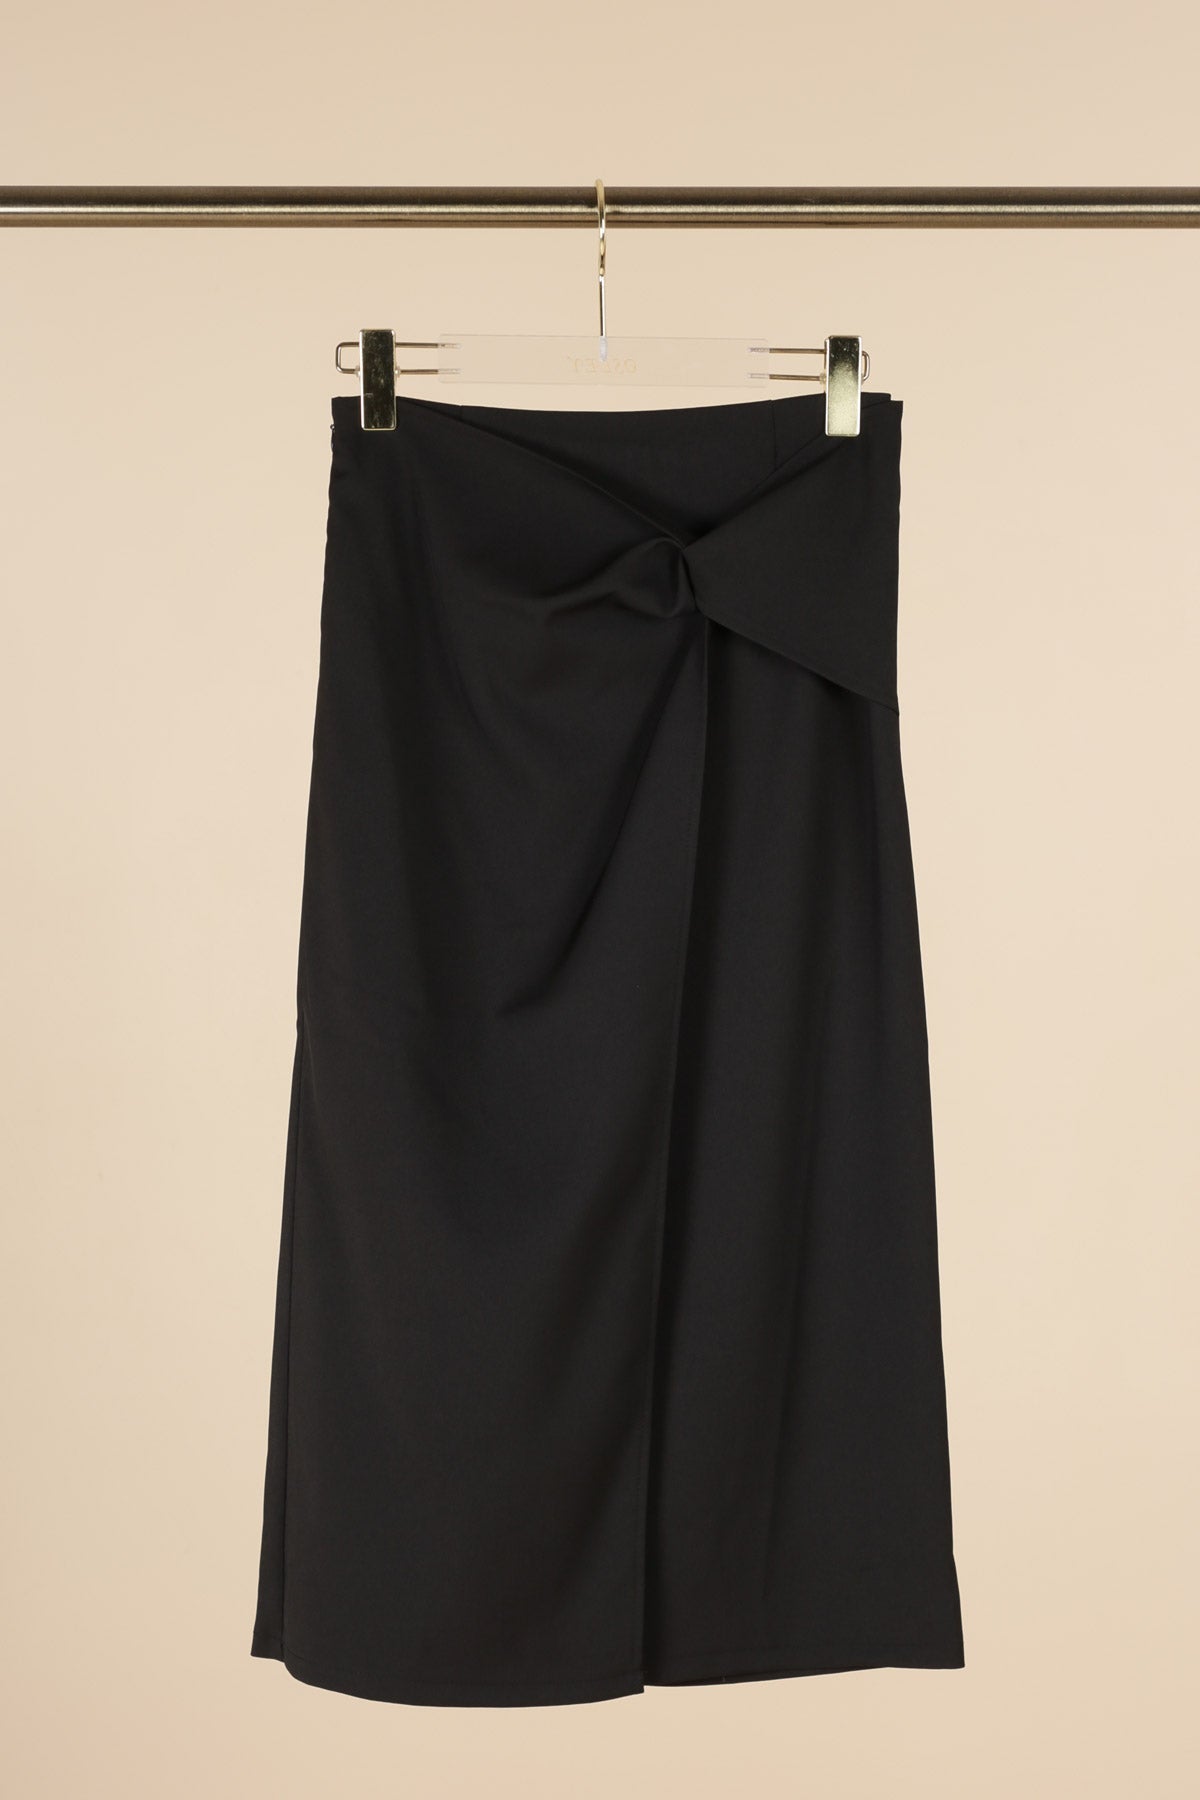 Black Corner Tie Skirt